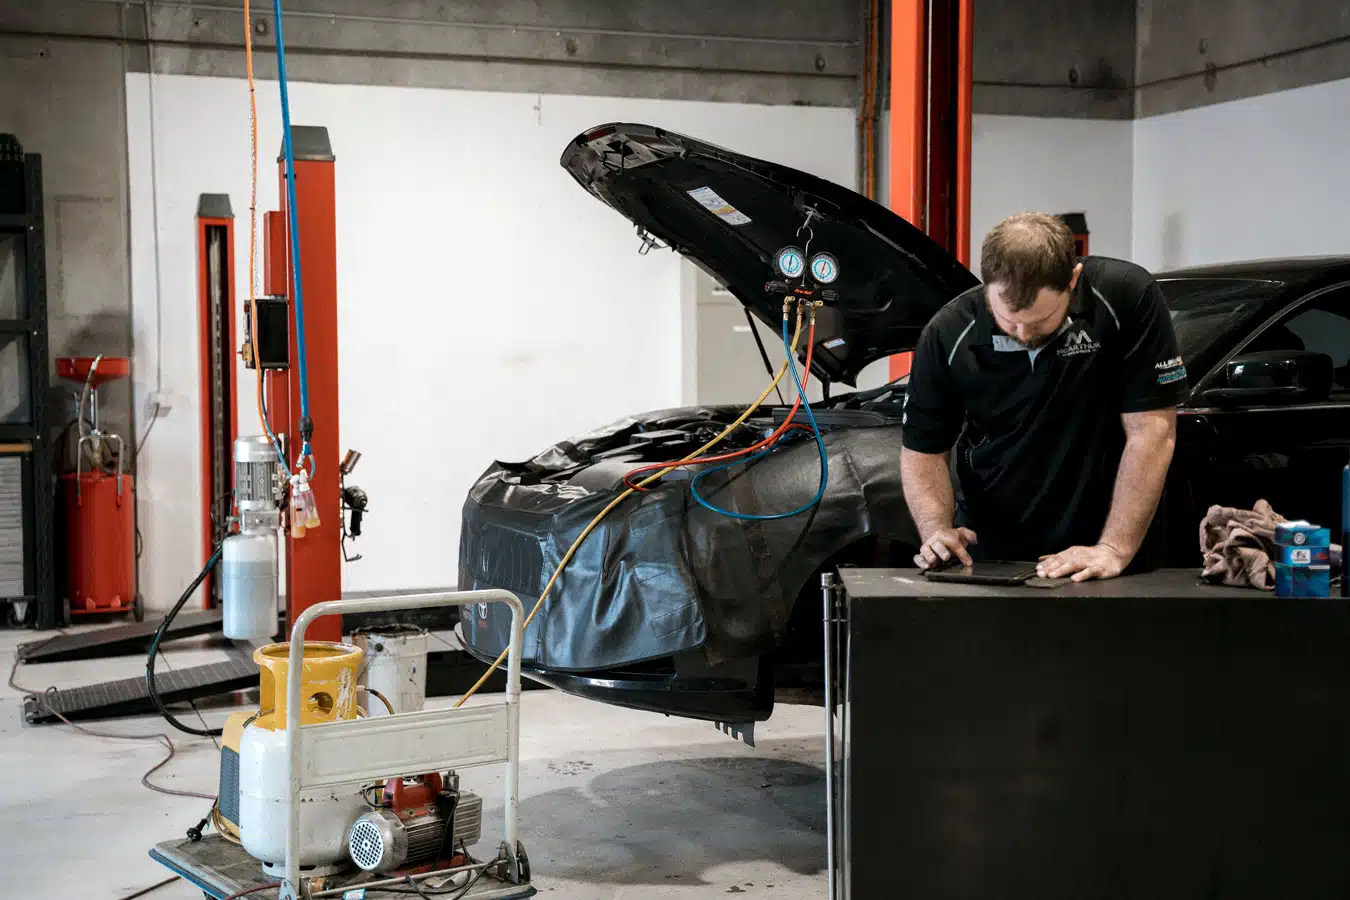 Mechanic fixing a car's internal components